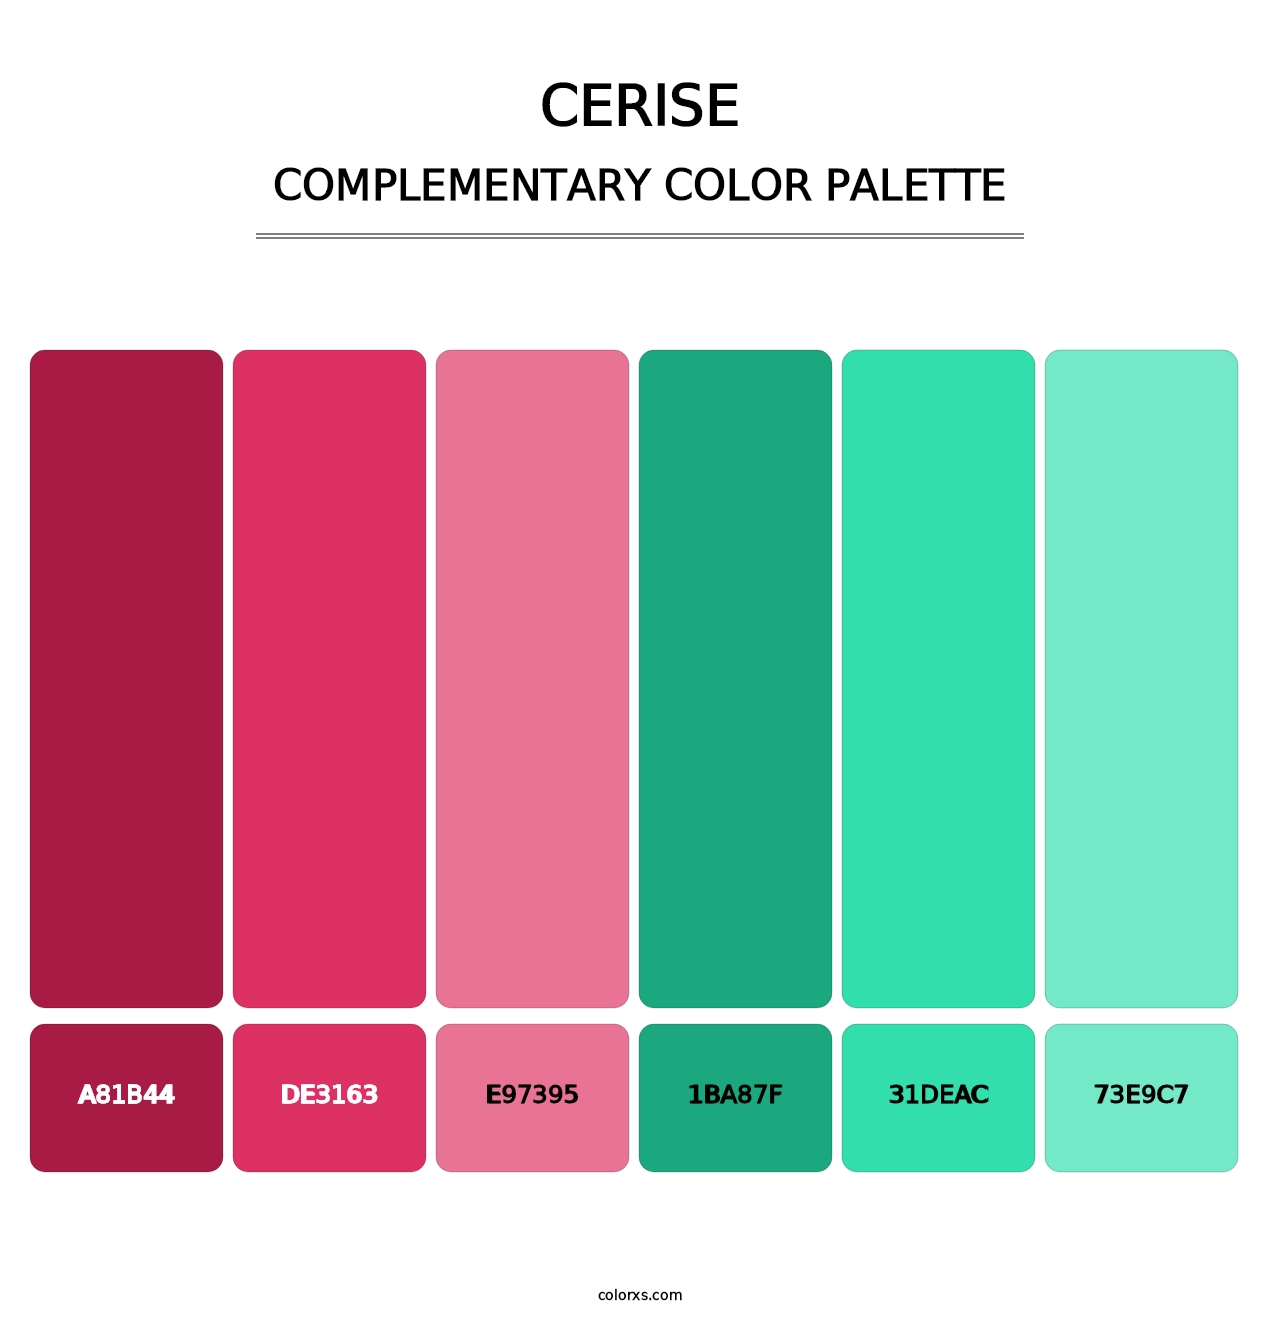 Cerise - Complementary Color Palette